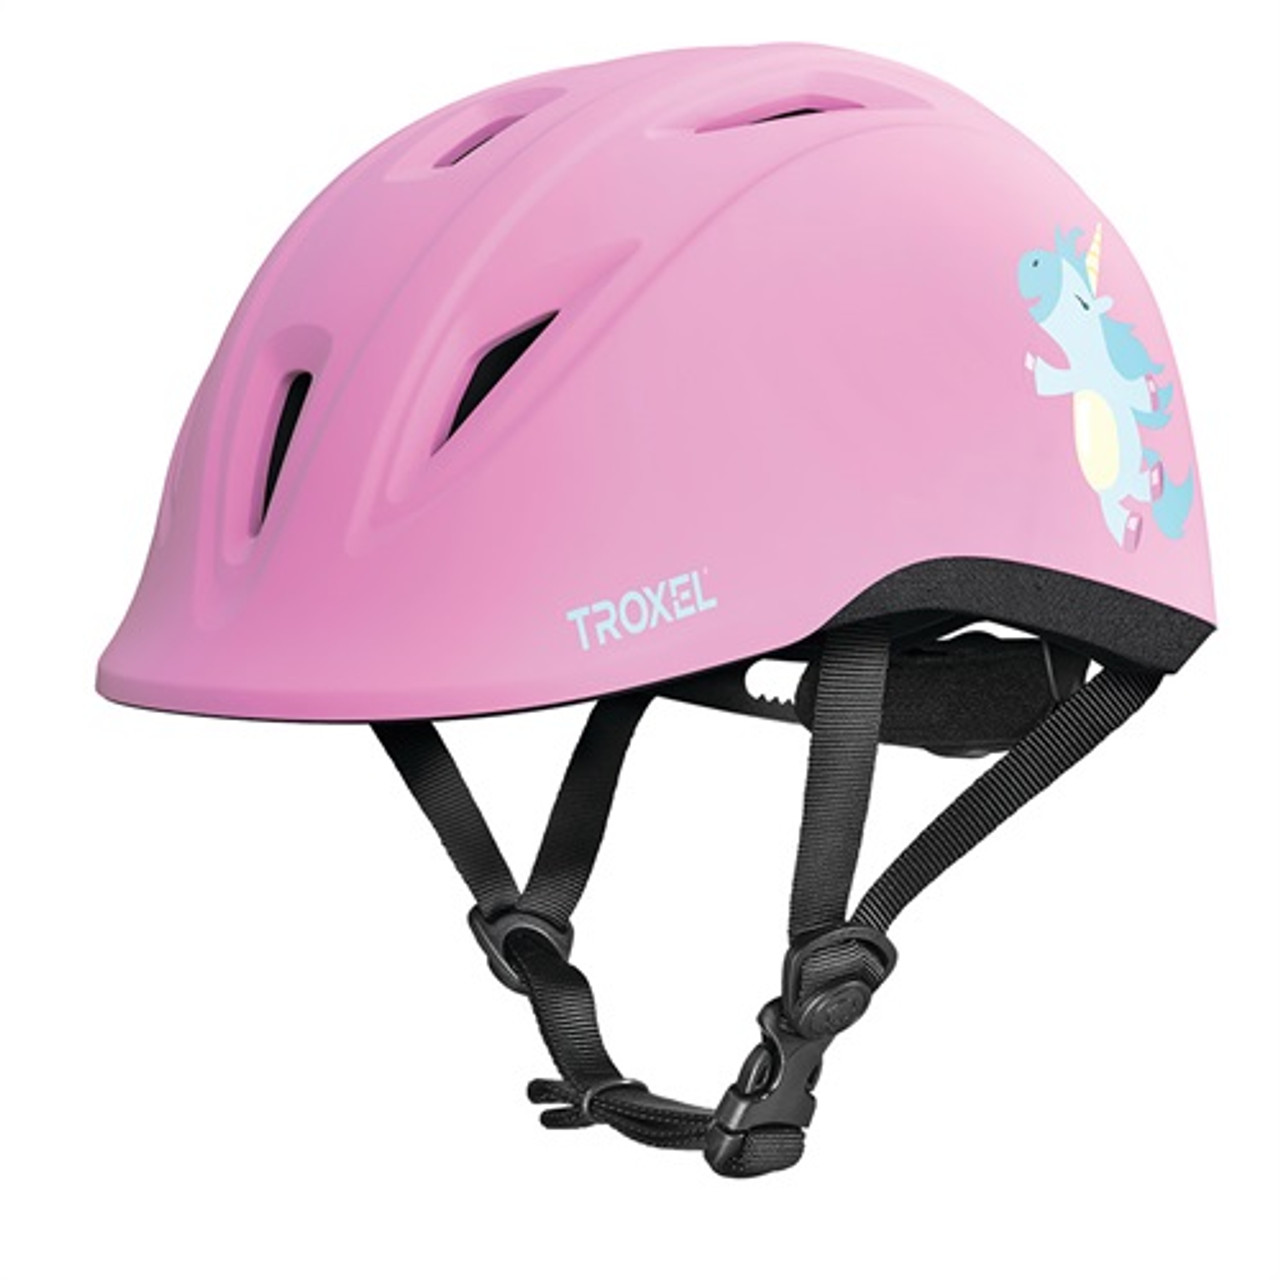 Troxel Toddler Helmet - pink unicorn